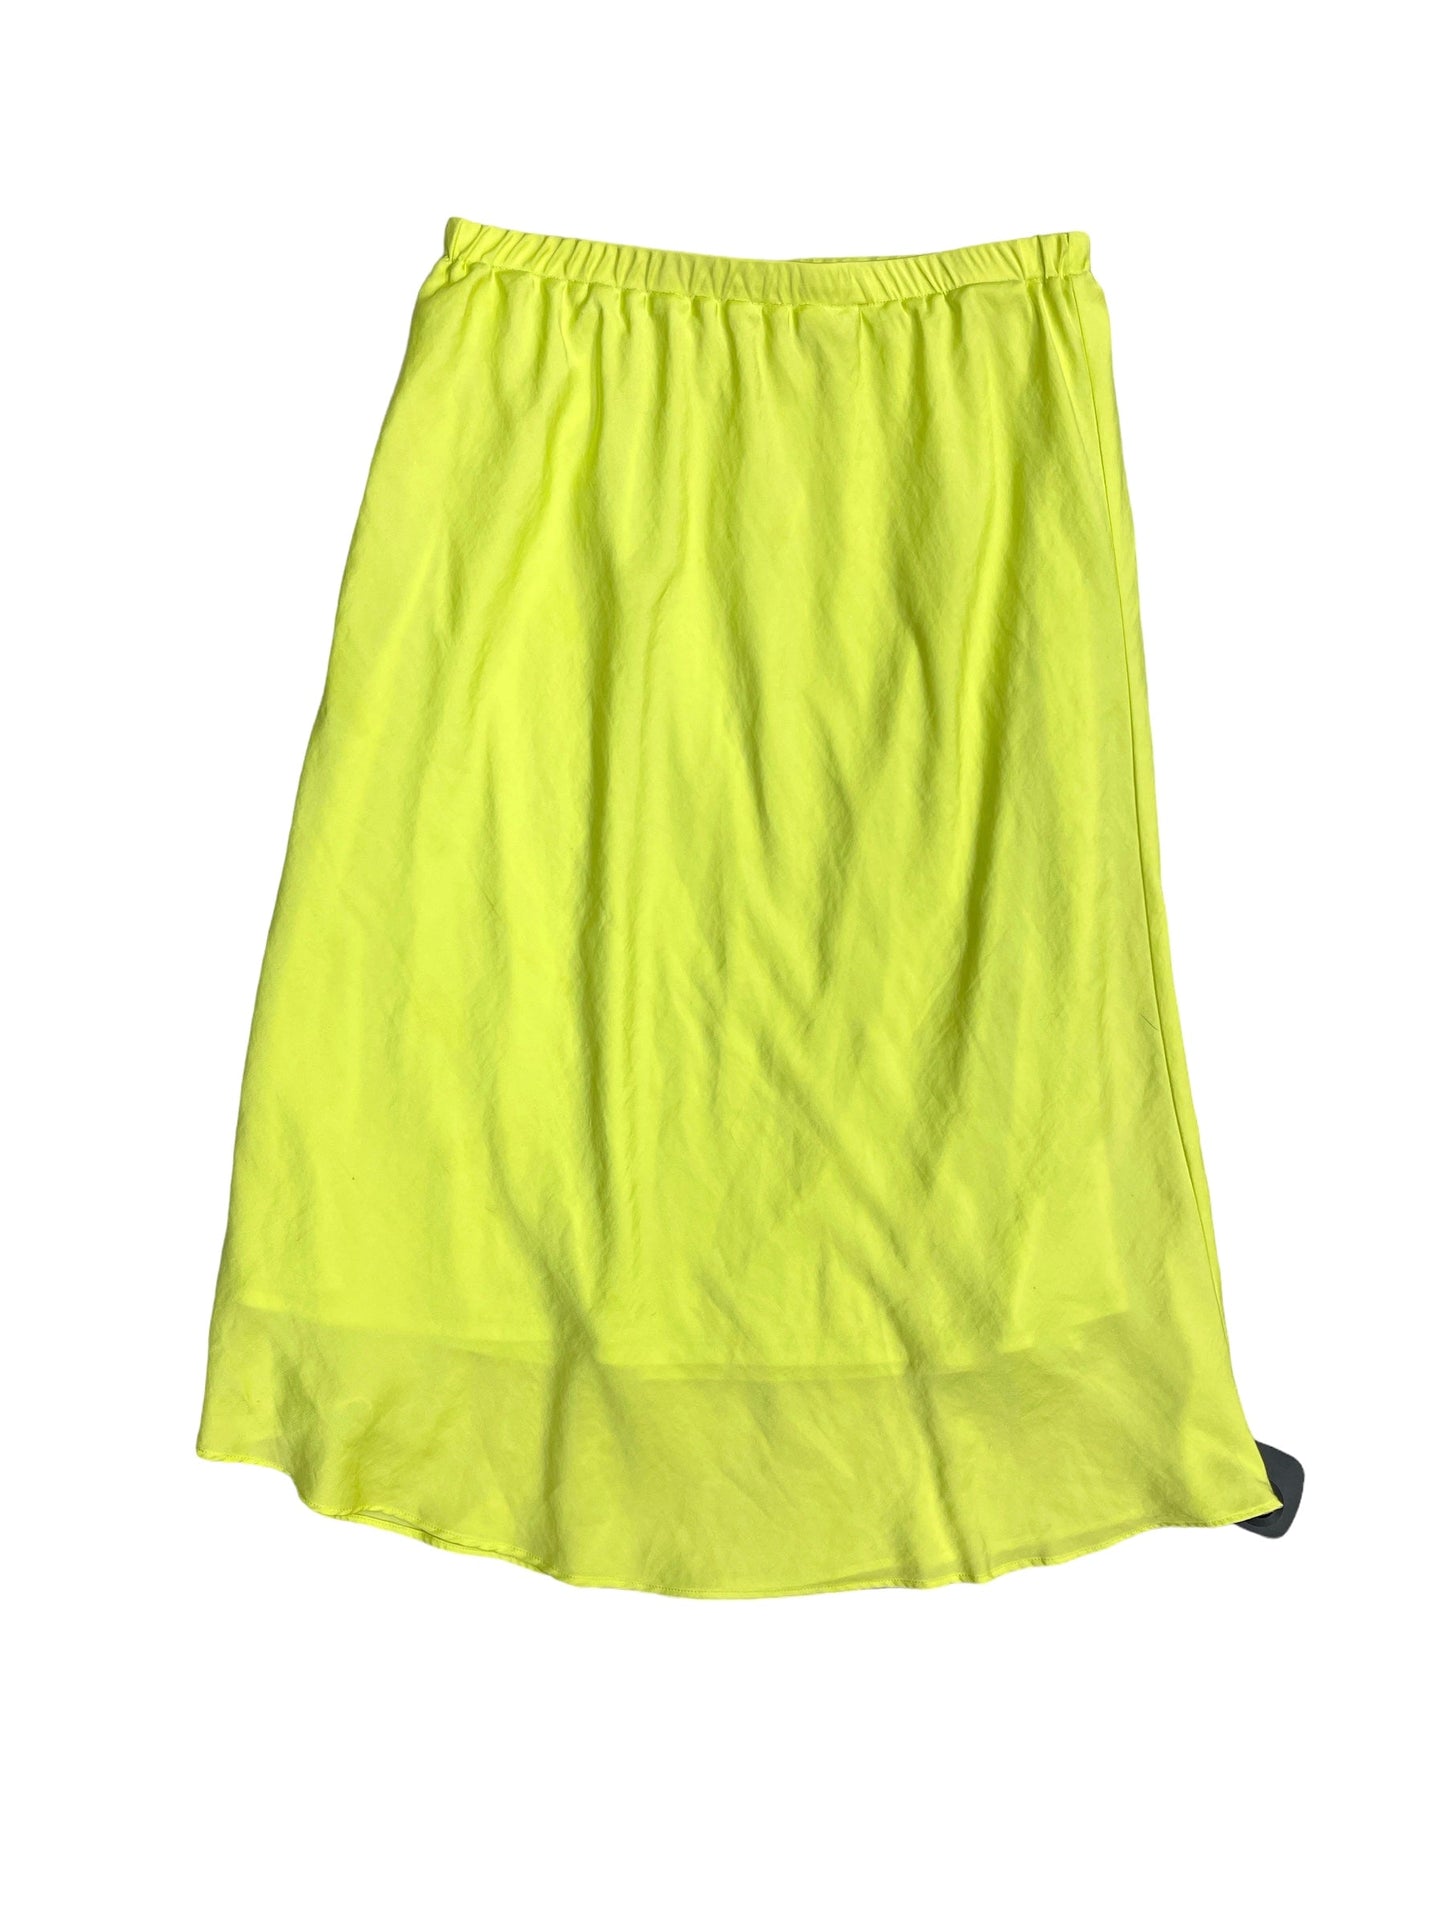 Skirt Midi By Banana Republic  Size: Xs